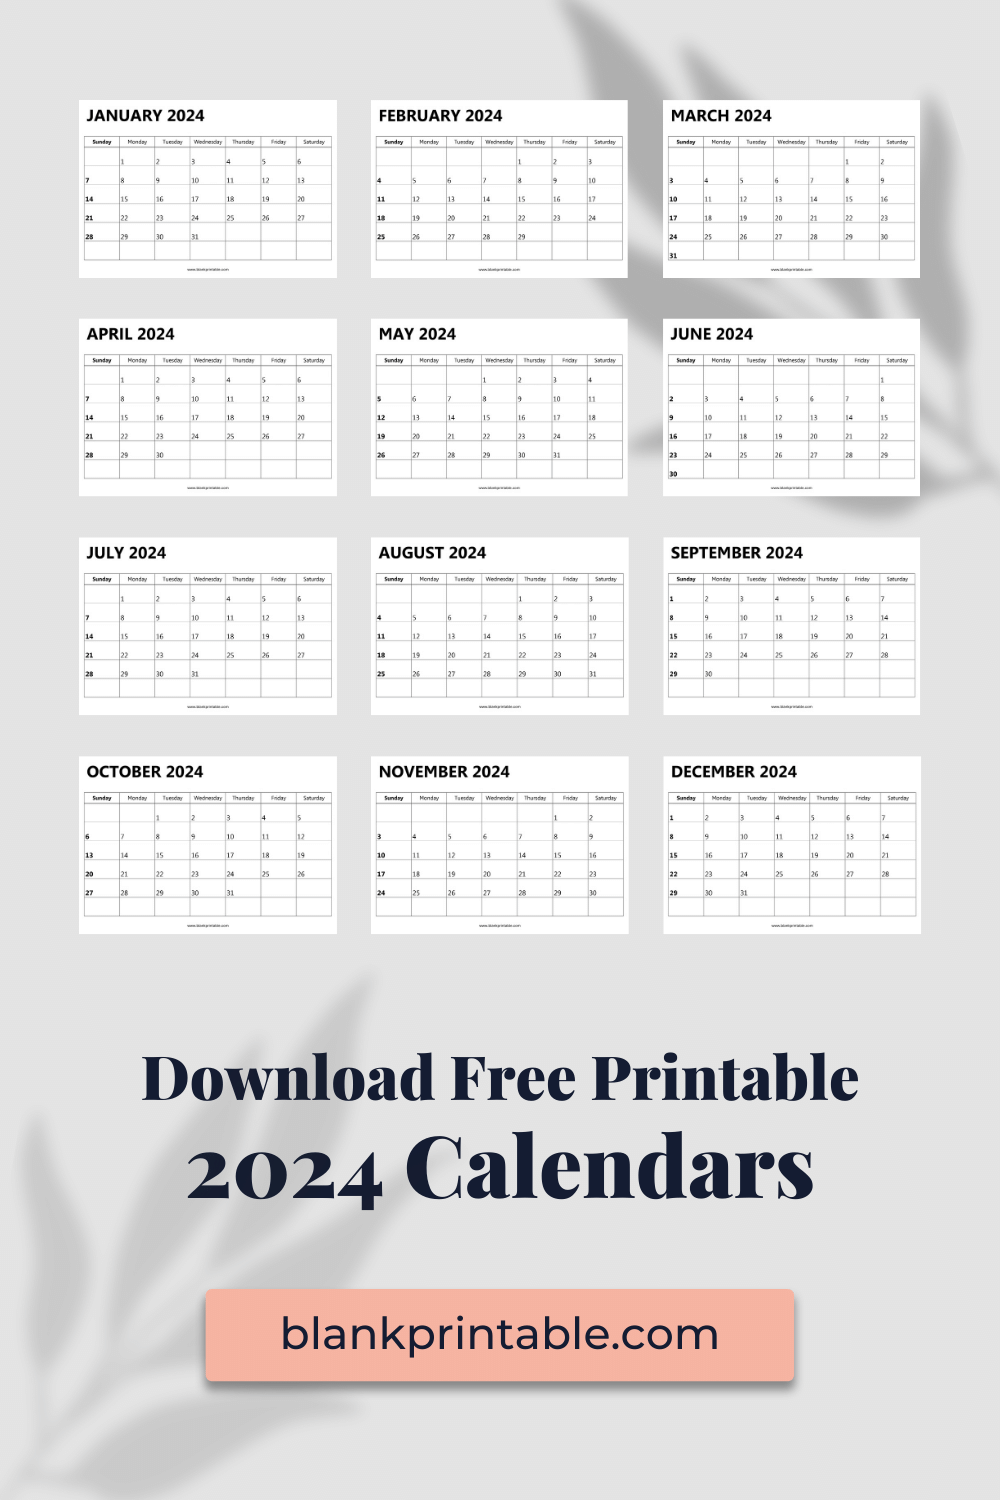 Blank Printable throughout Free Printable Calendar 2024 Tumblr